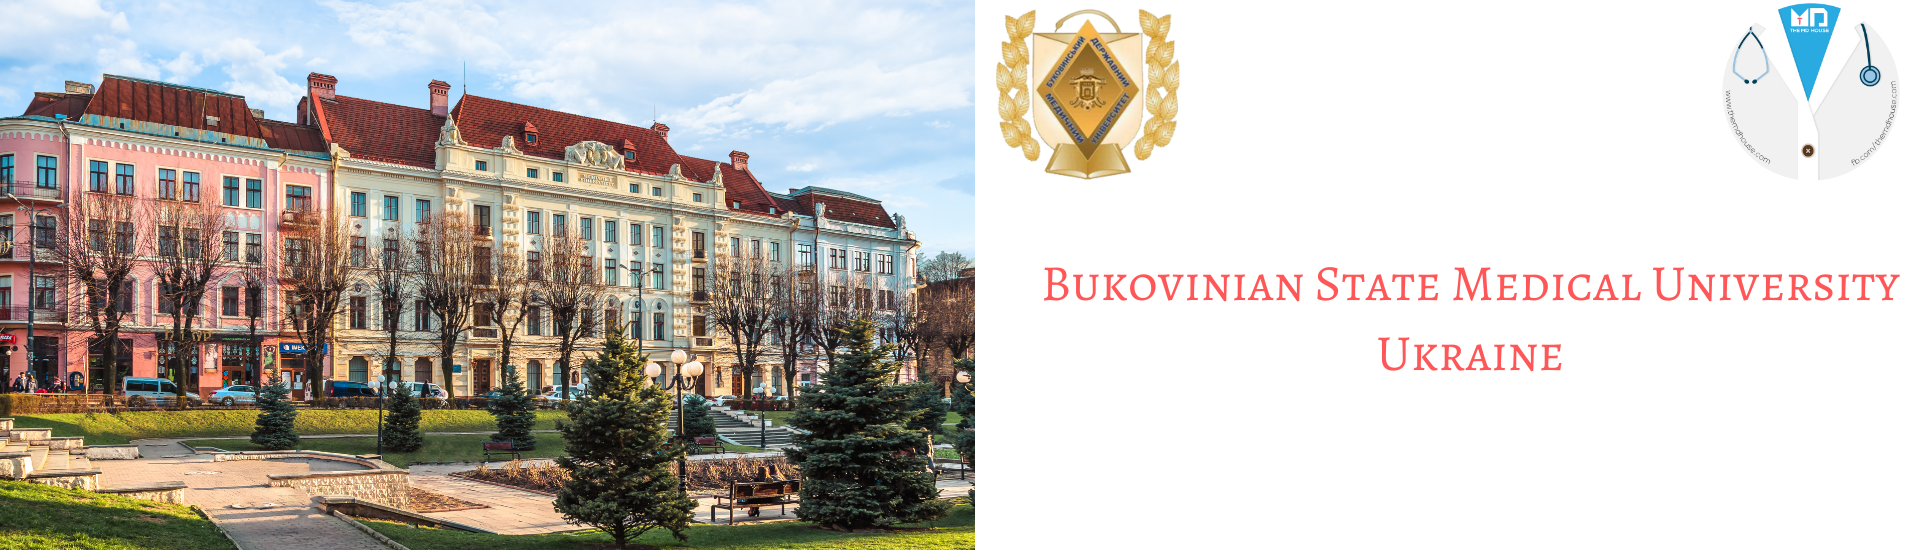 Bukovinian State Medical University in Ukraine